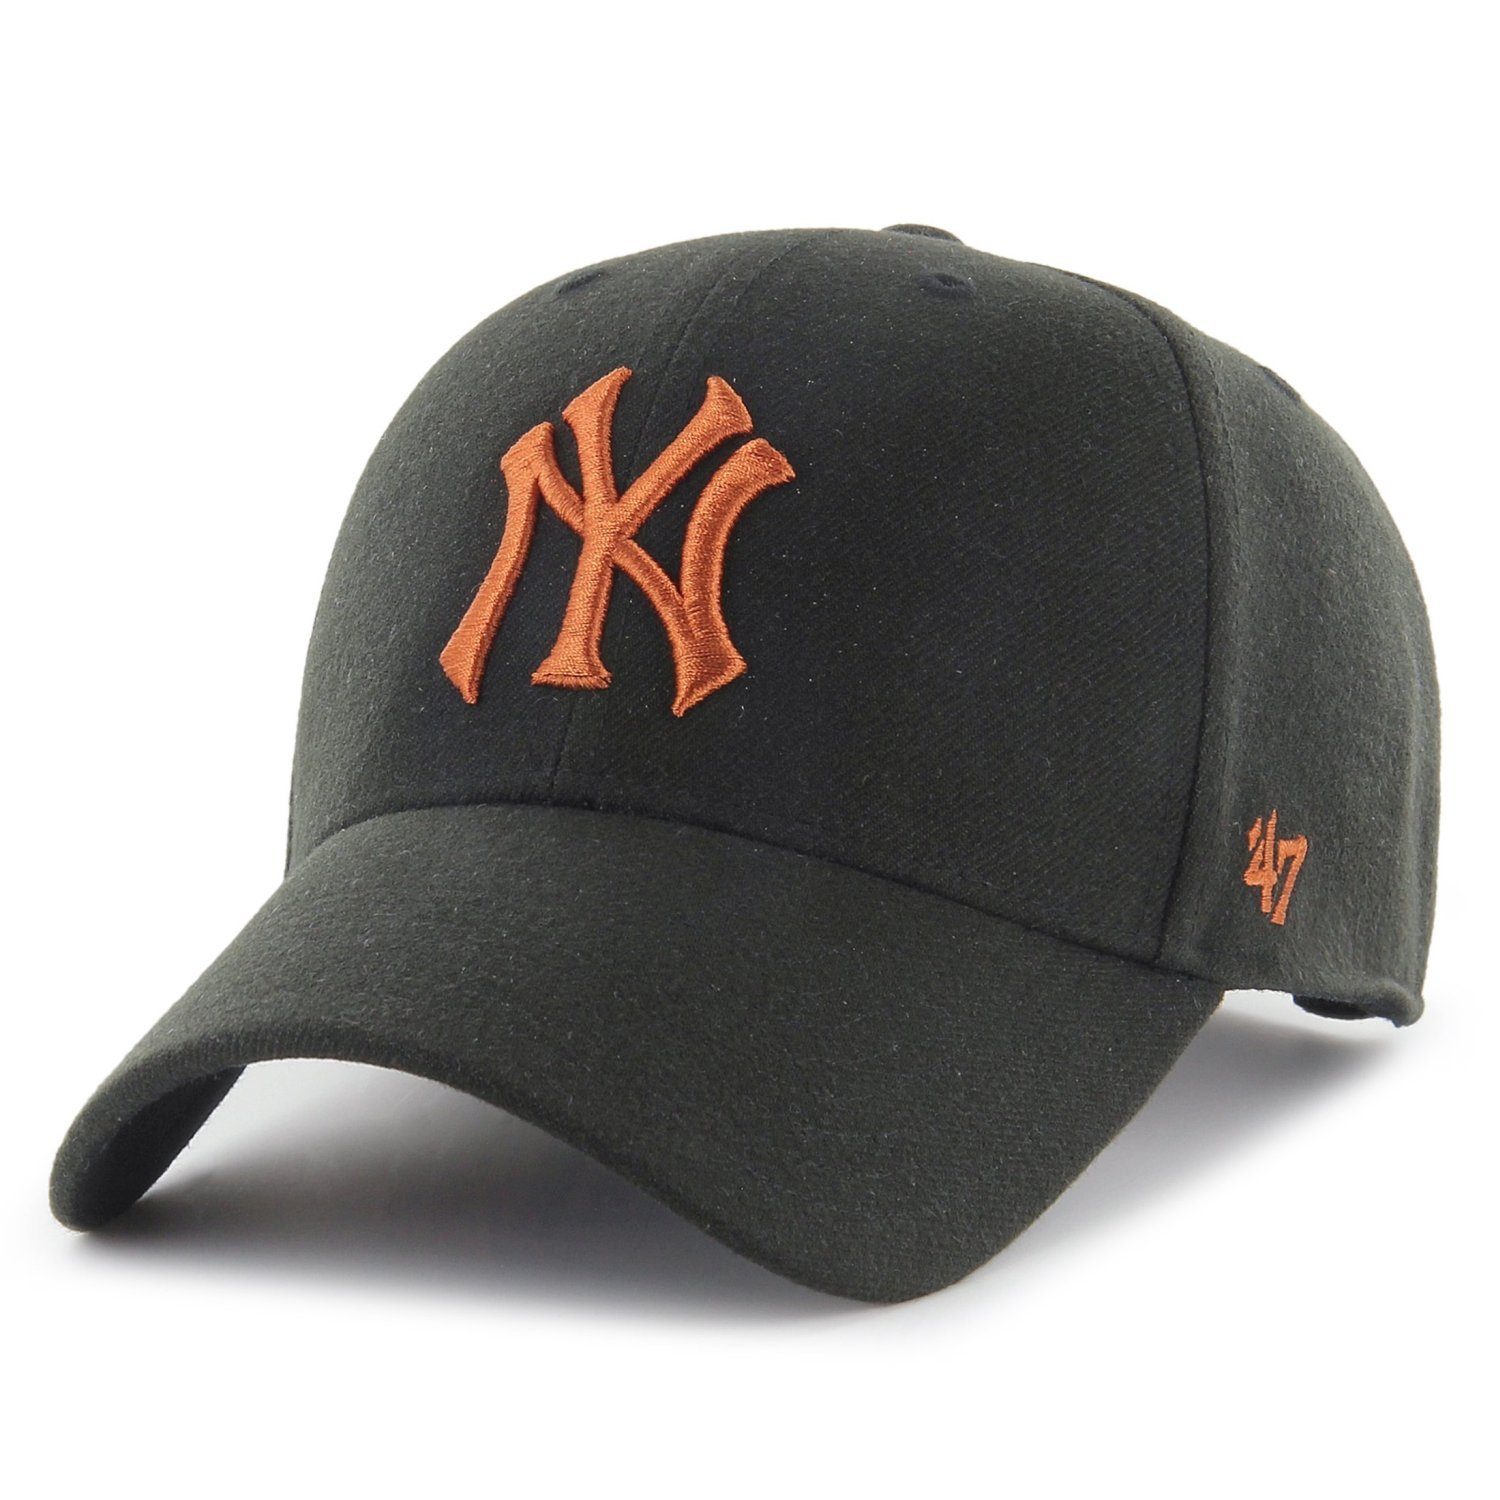 Trucker Brand Curved York Cap MLB '47 Yankees New